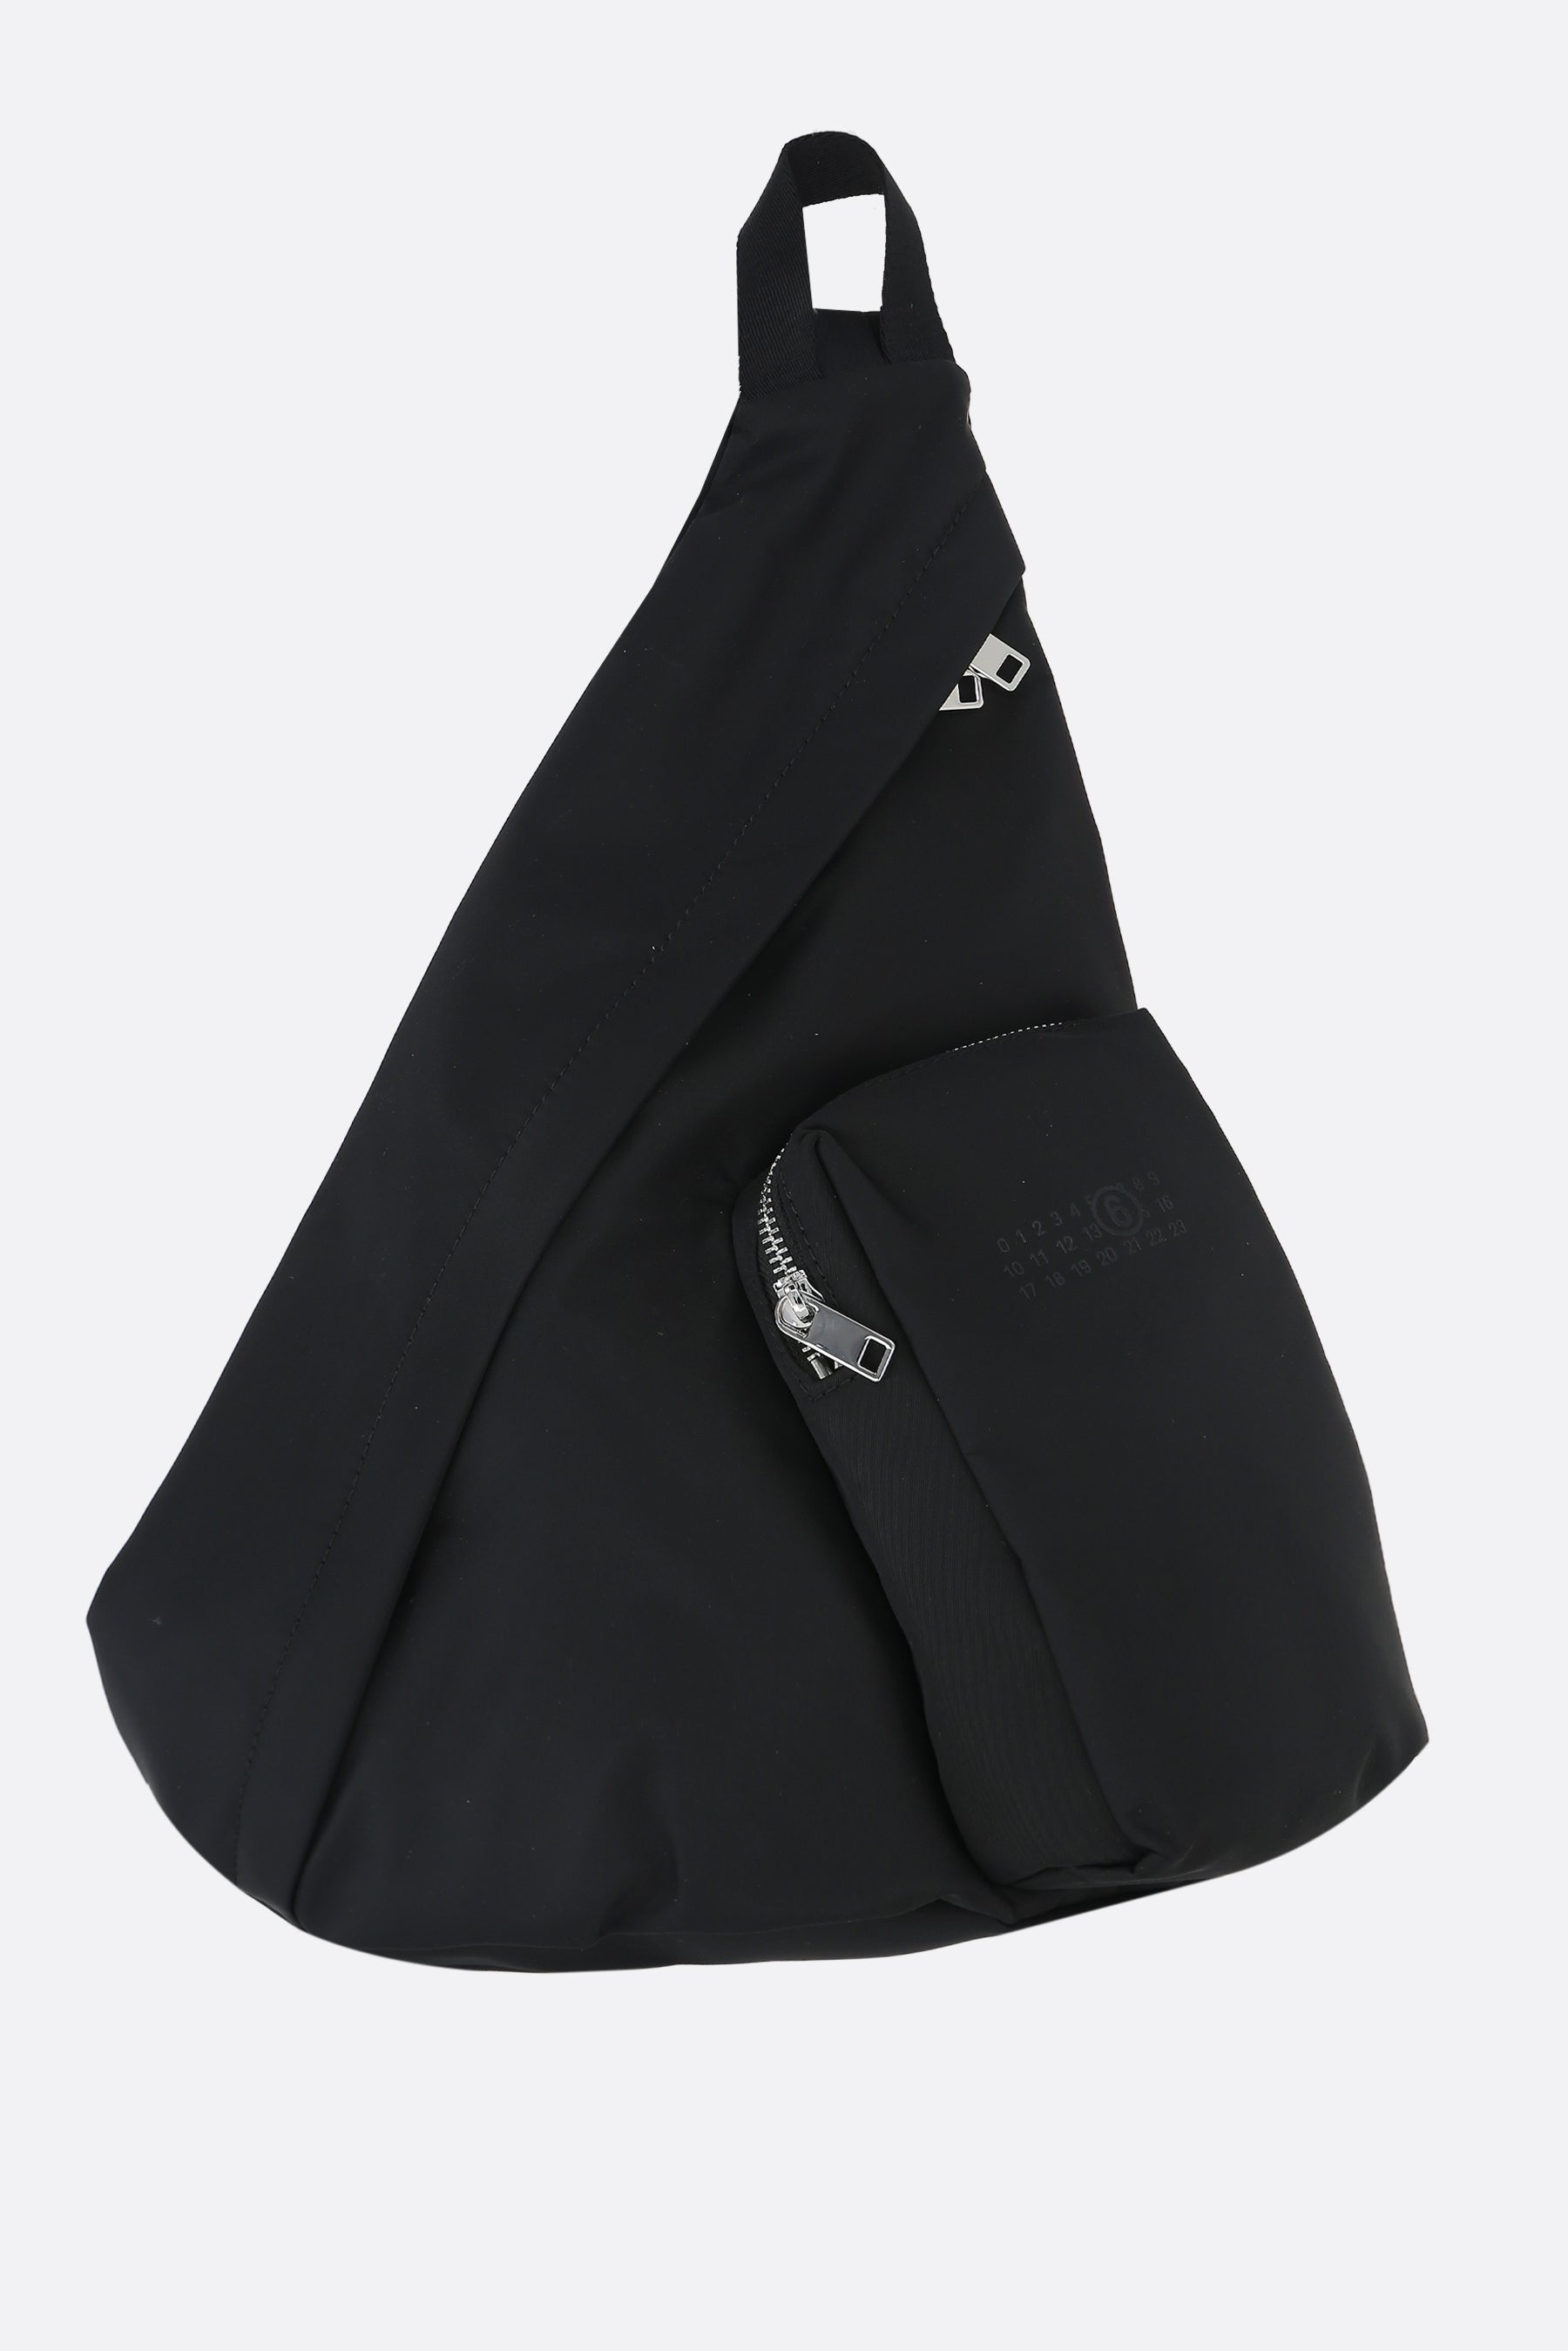 Japanese nylon one-shoulder backpack